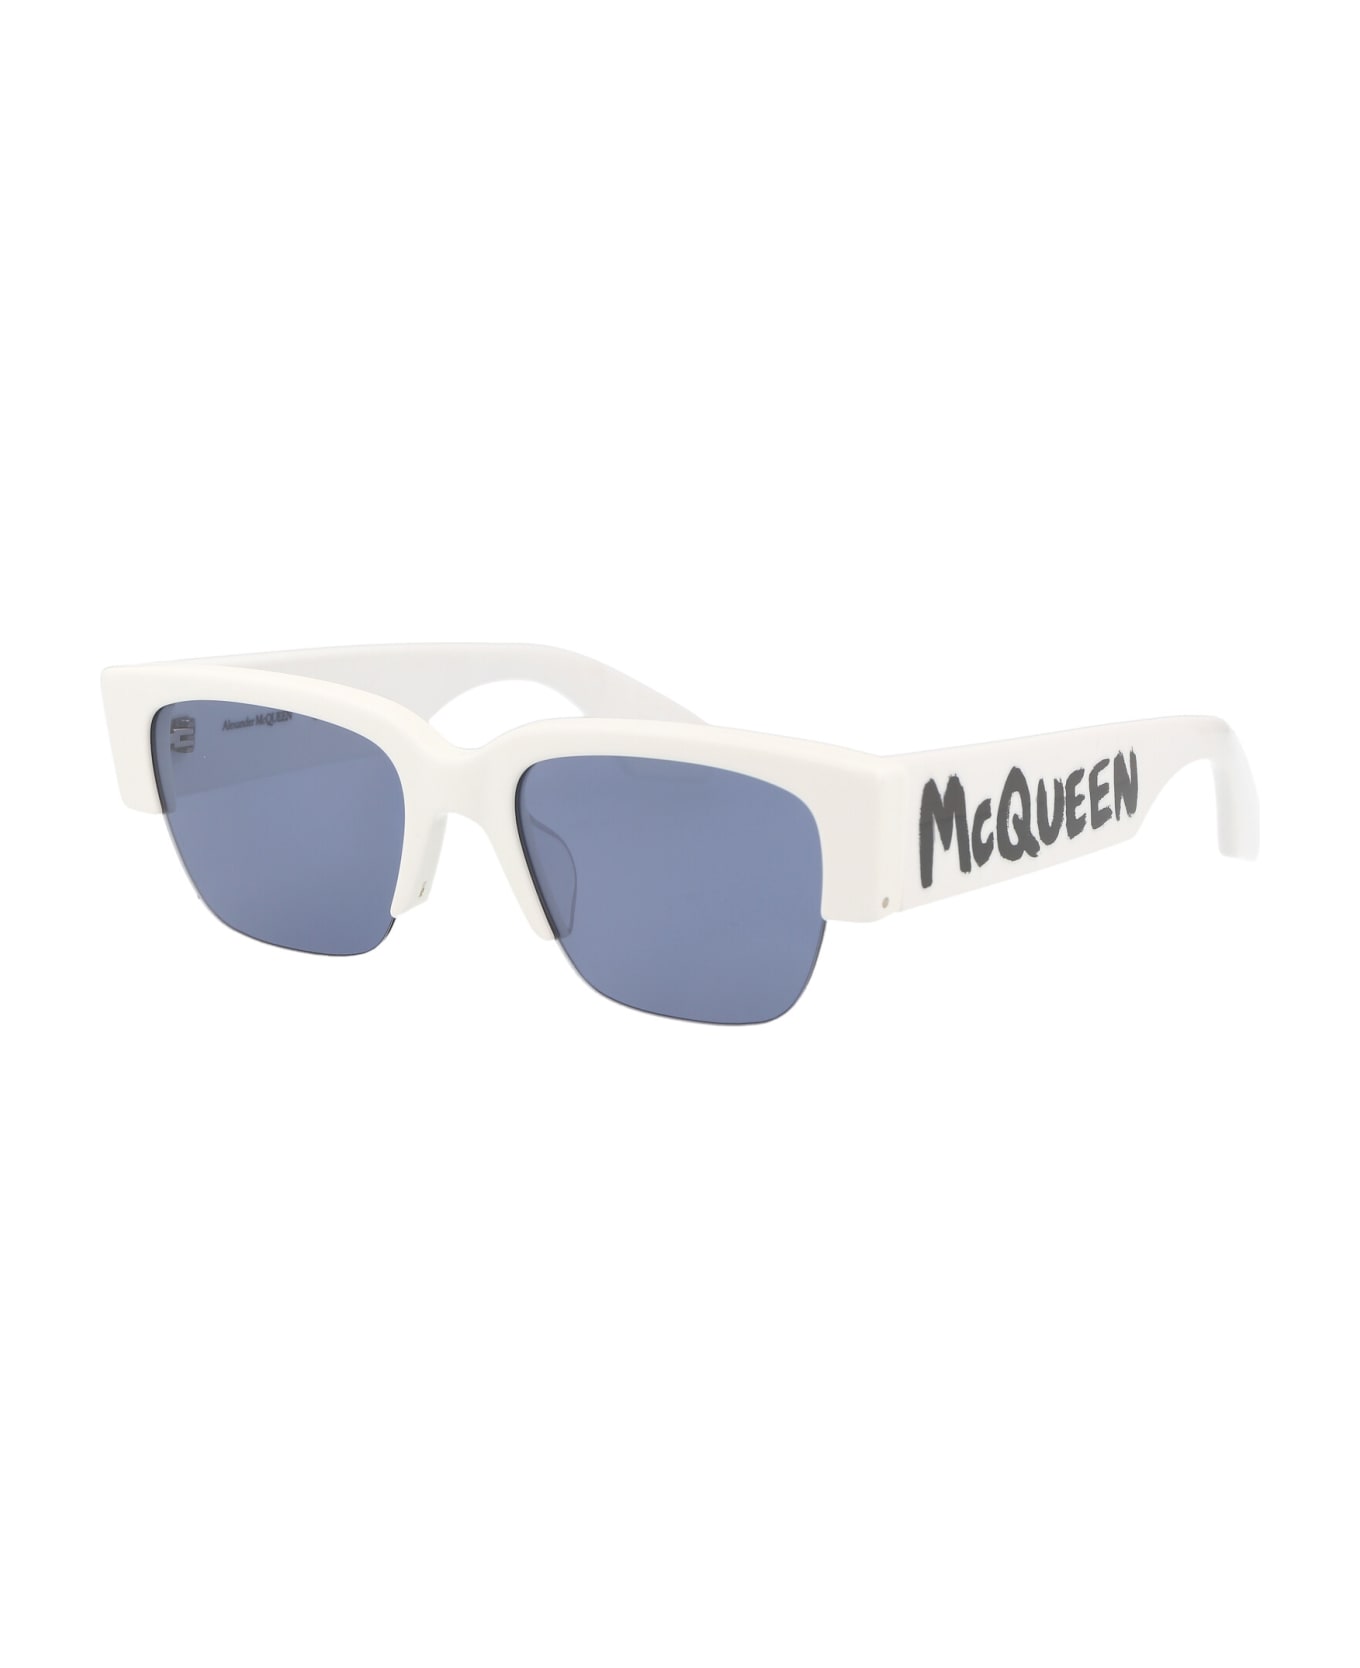 Alexander McQueen Eyewear Am0405s Sunglasses - 004 WHITE WHITE BLUE サングラス